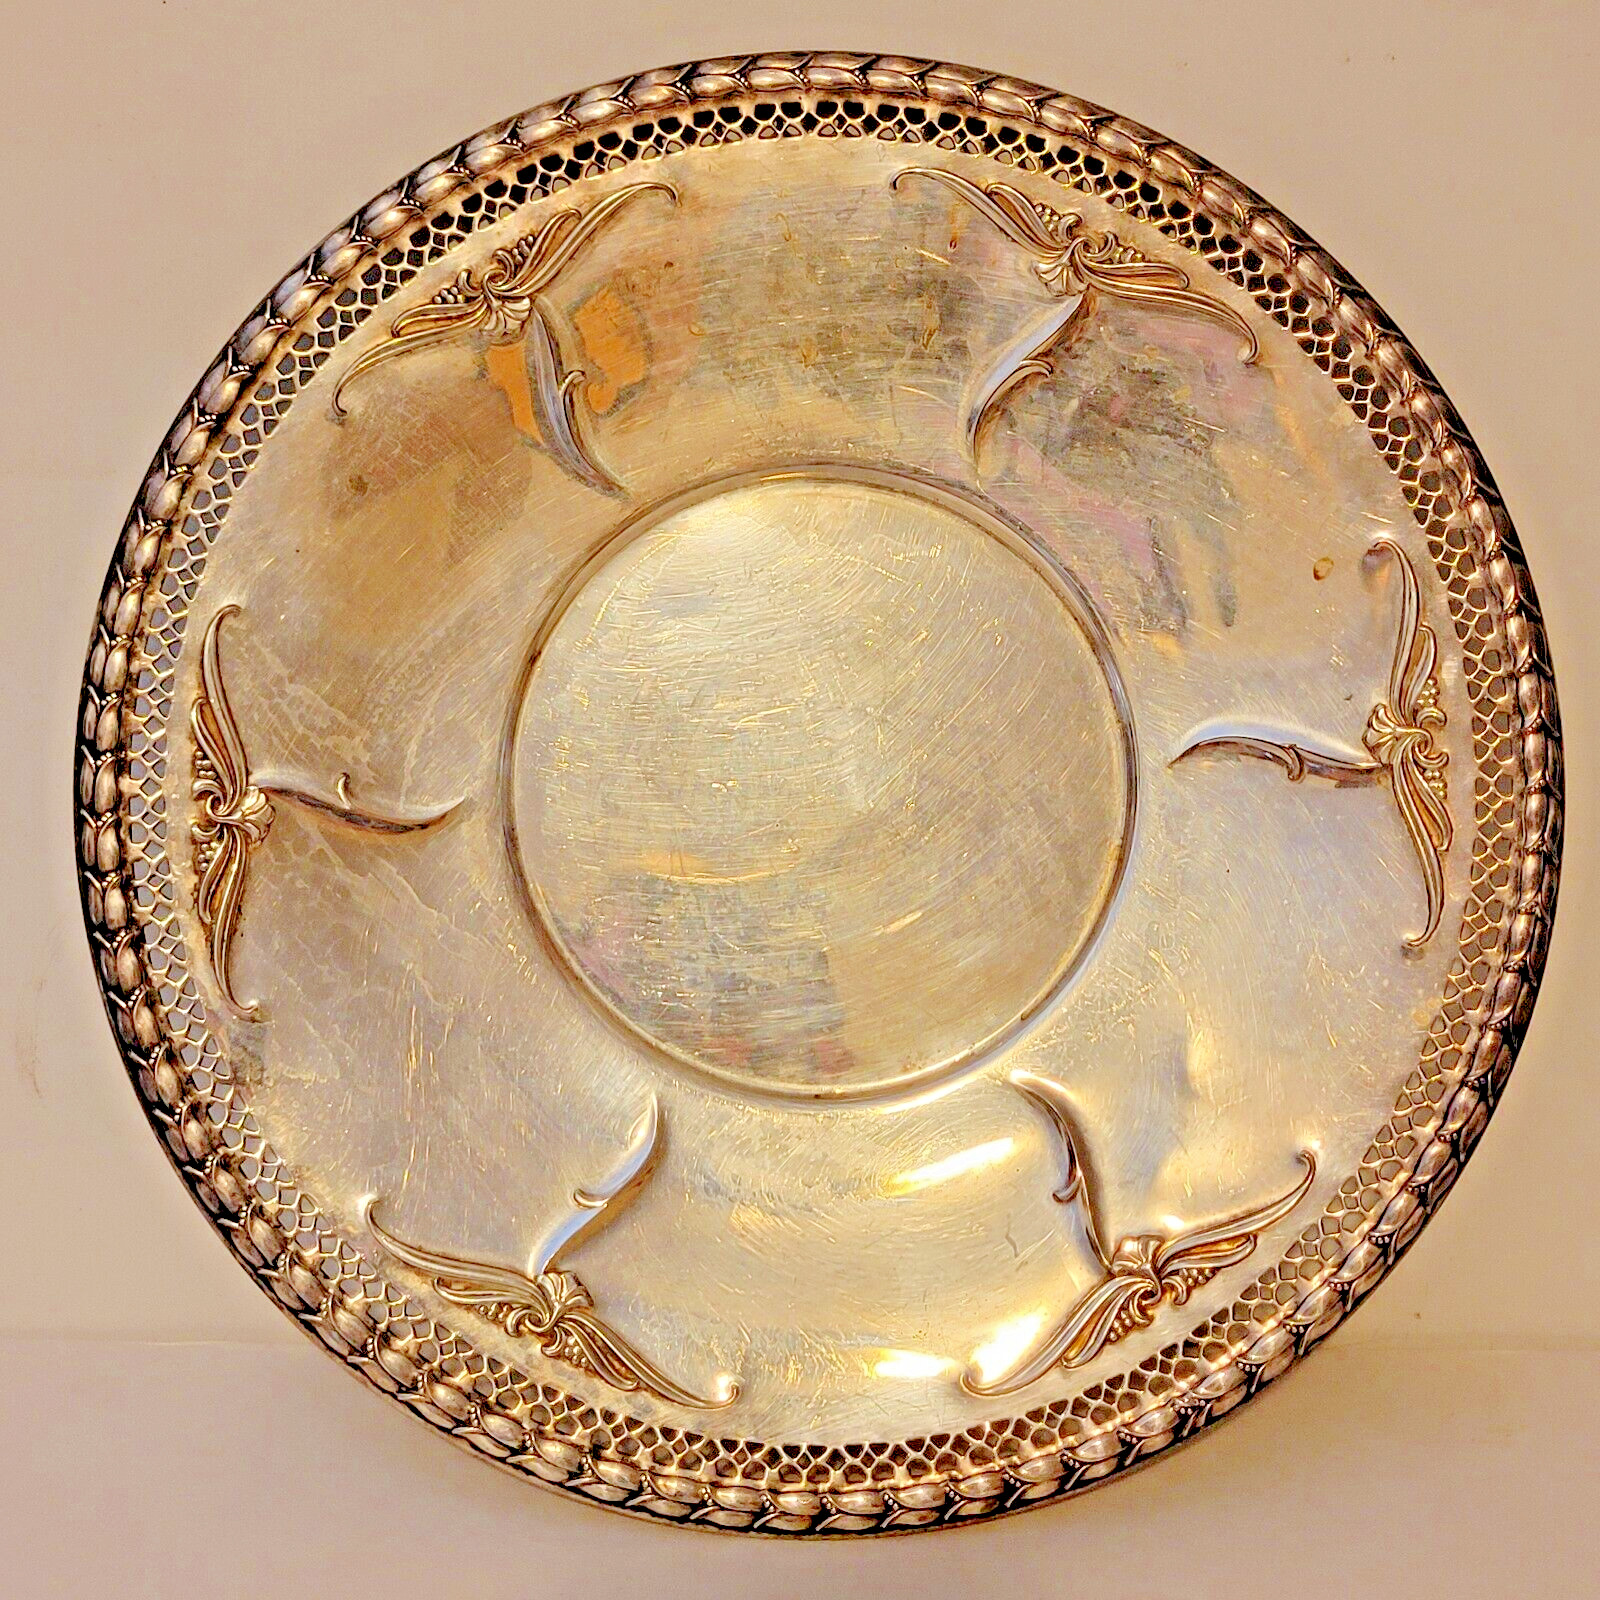 Fantasy Tudor Plate Oneida Community Serving Platter Vintage 13109-2